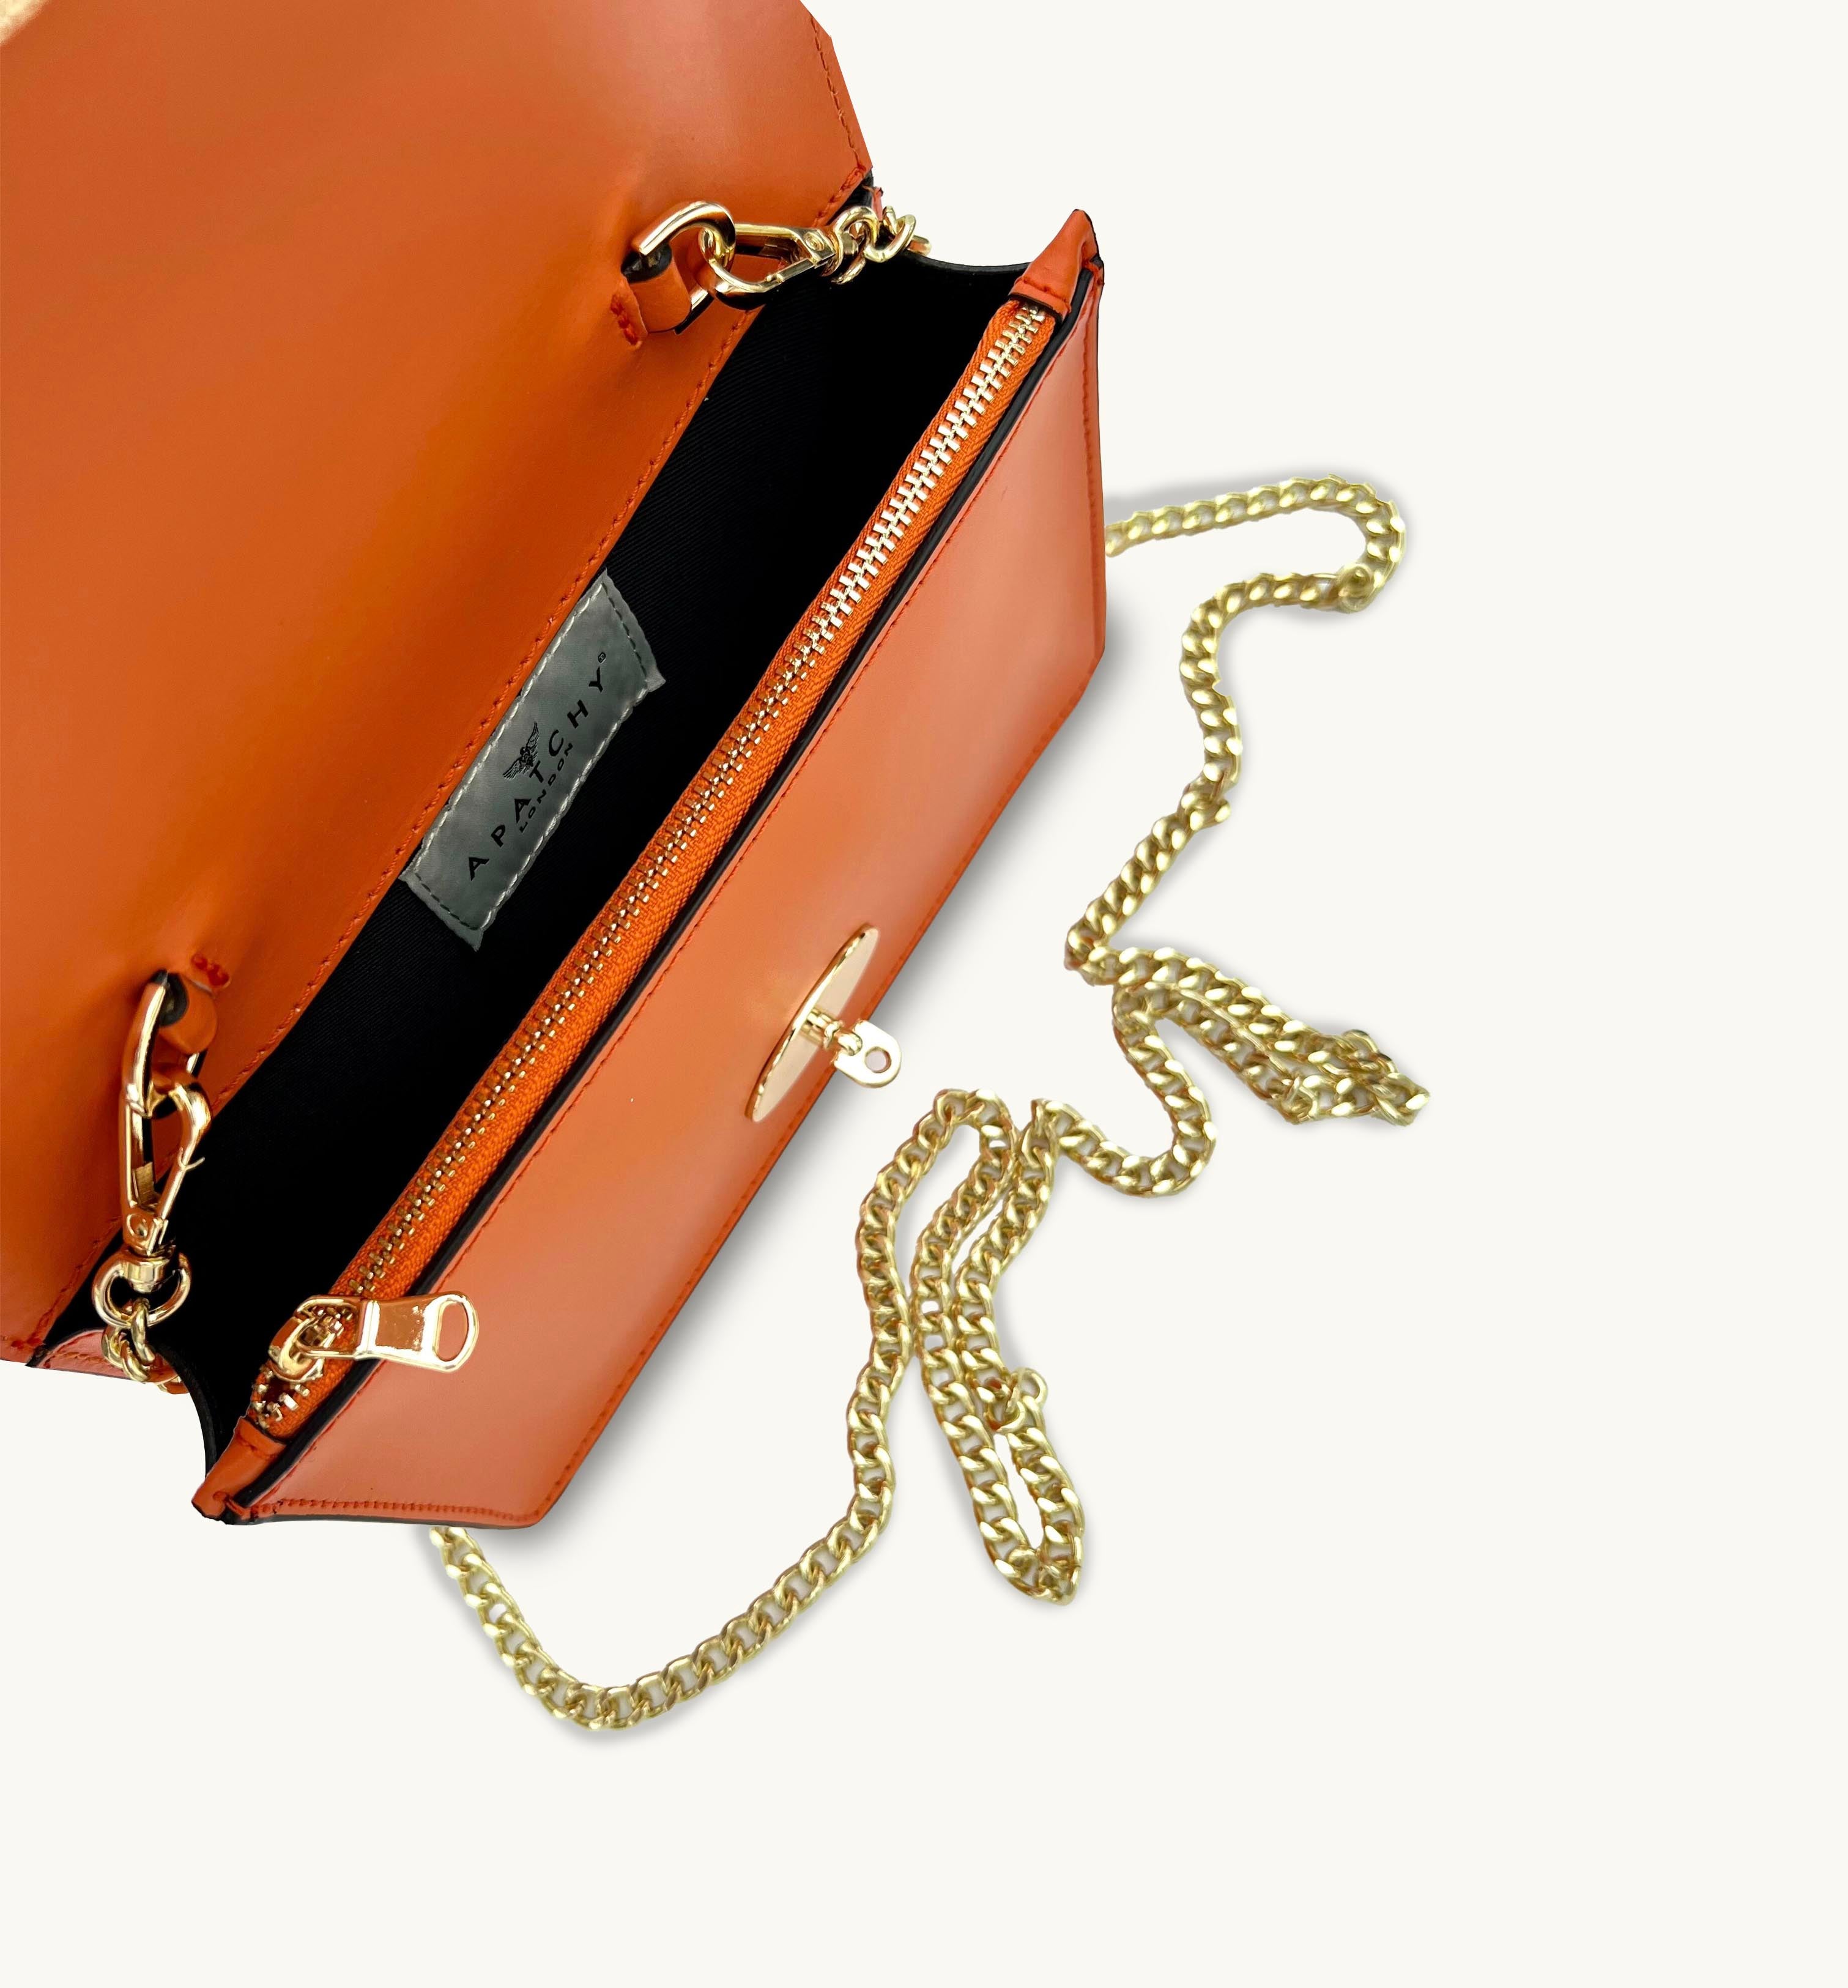 The Amelia Orange Leather Bag